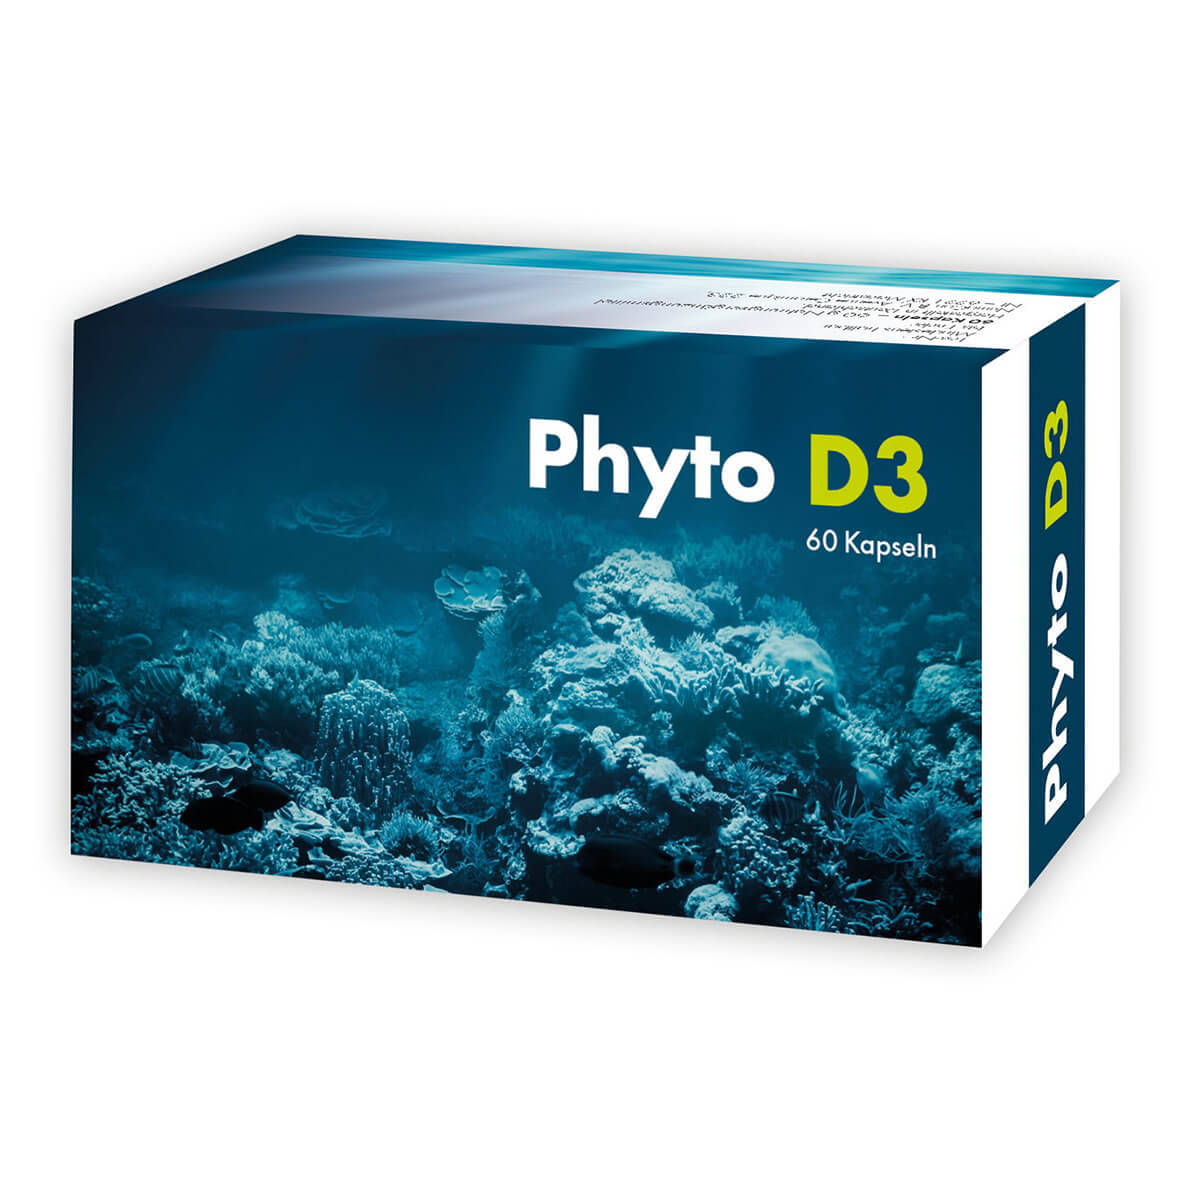 Phyto D3 6-Monatskur 6 Schachteln